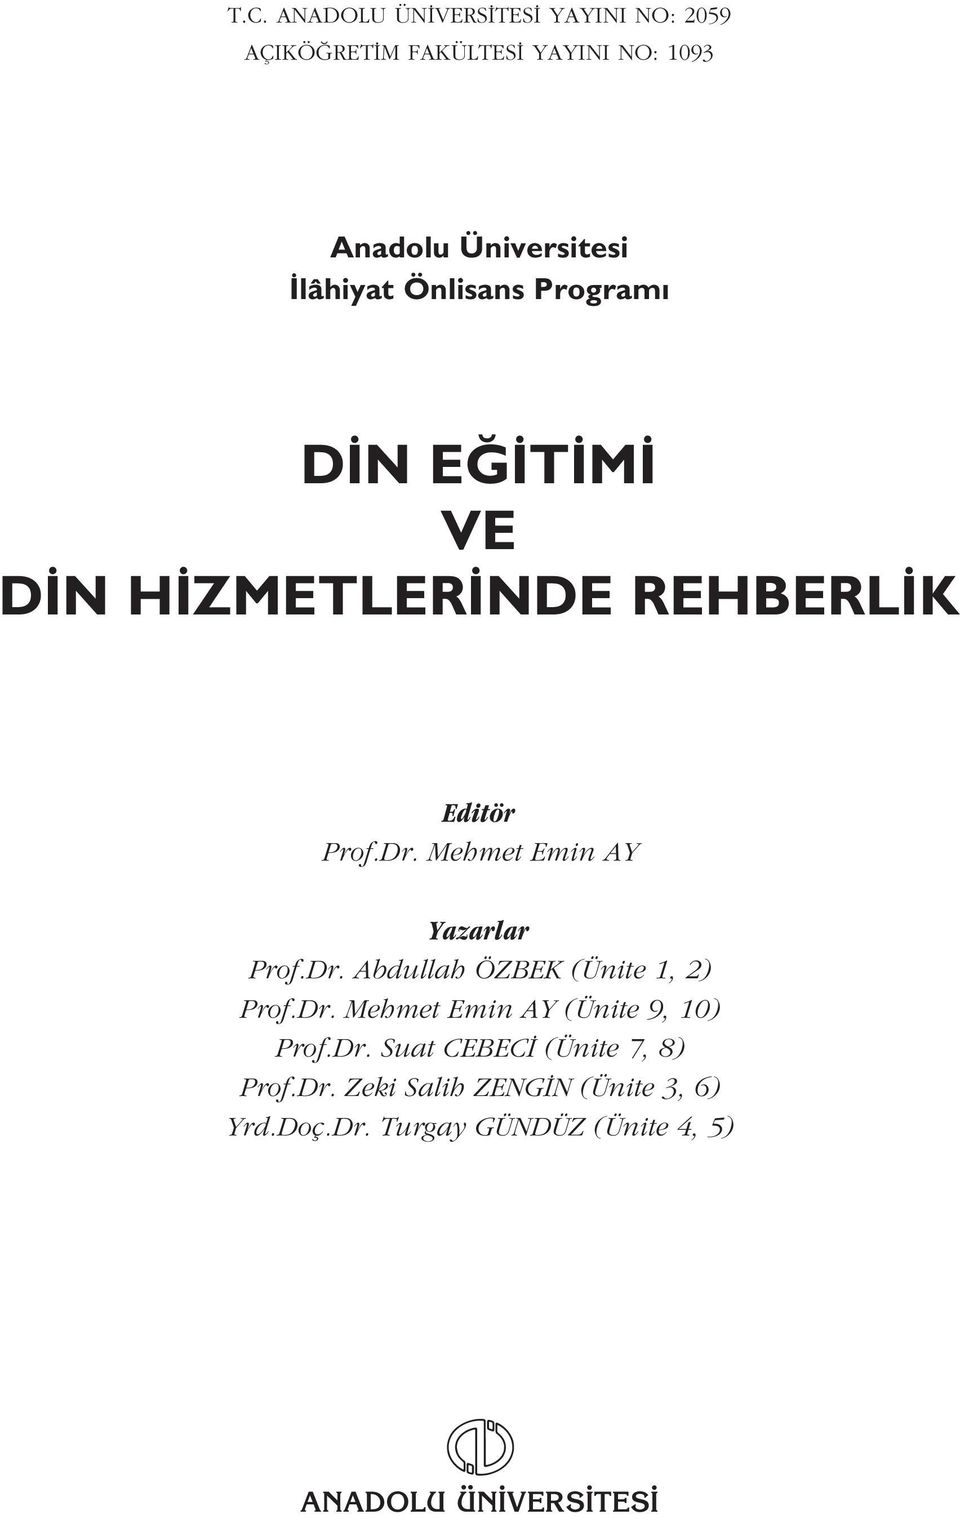 Mehmet Emin AY Yazarlar Prof.Dr. Abdullah ÖZBEK (Ünite 1, 2) Prof.Dr. Mehmet Emin AY (Ünite 9, 10) Prof.